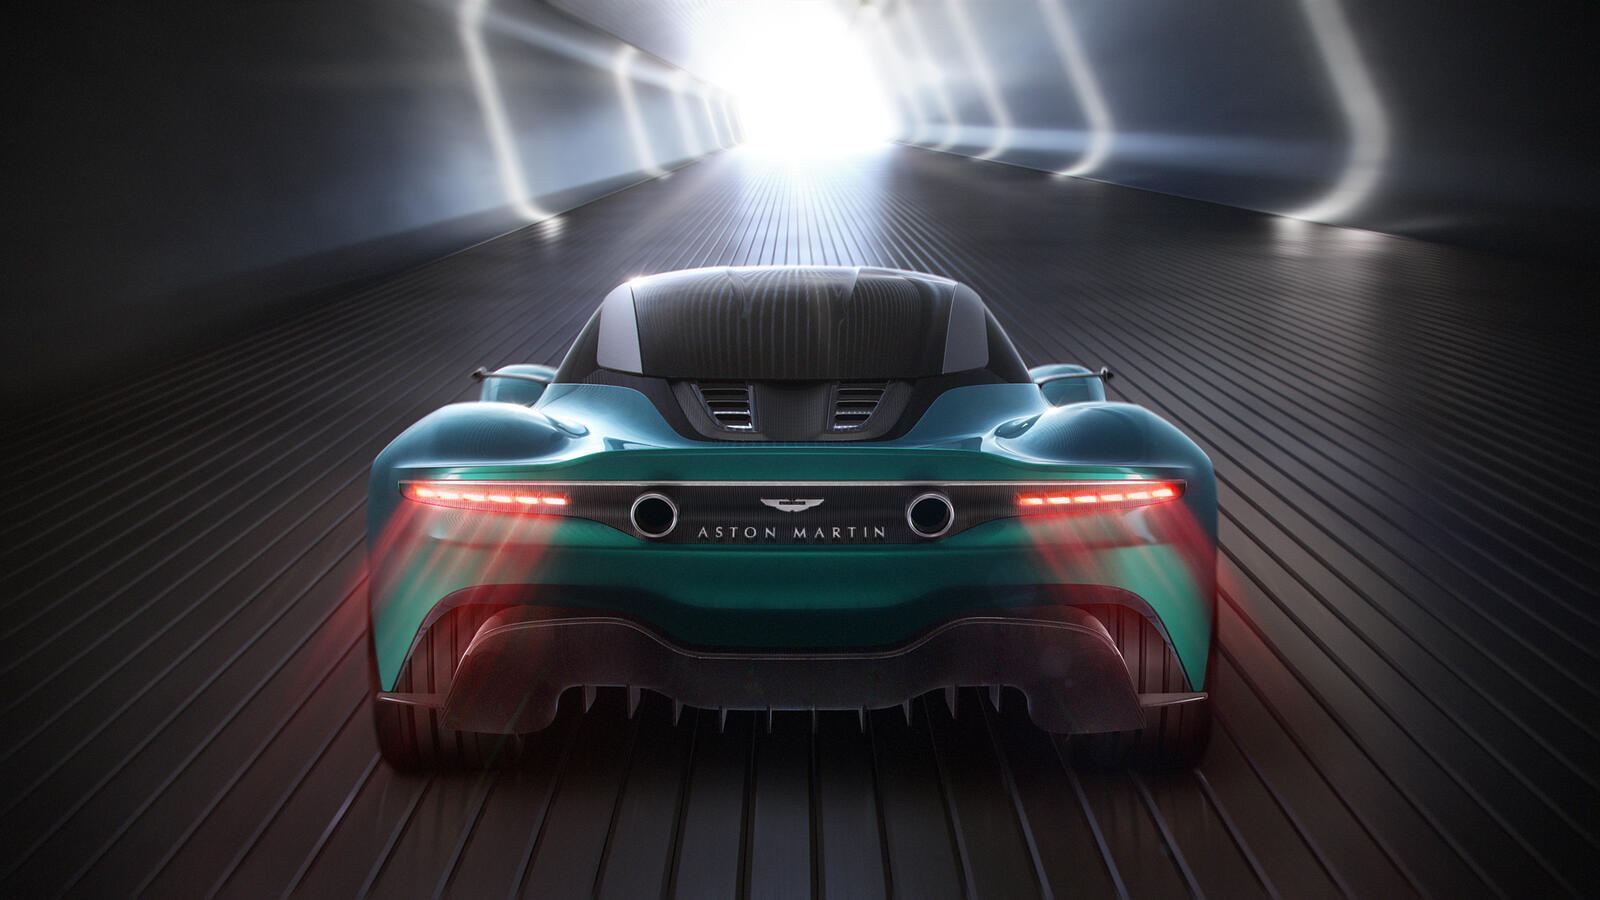 Wallpapers Aston Martin cars 2019 cars on the desktop